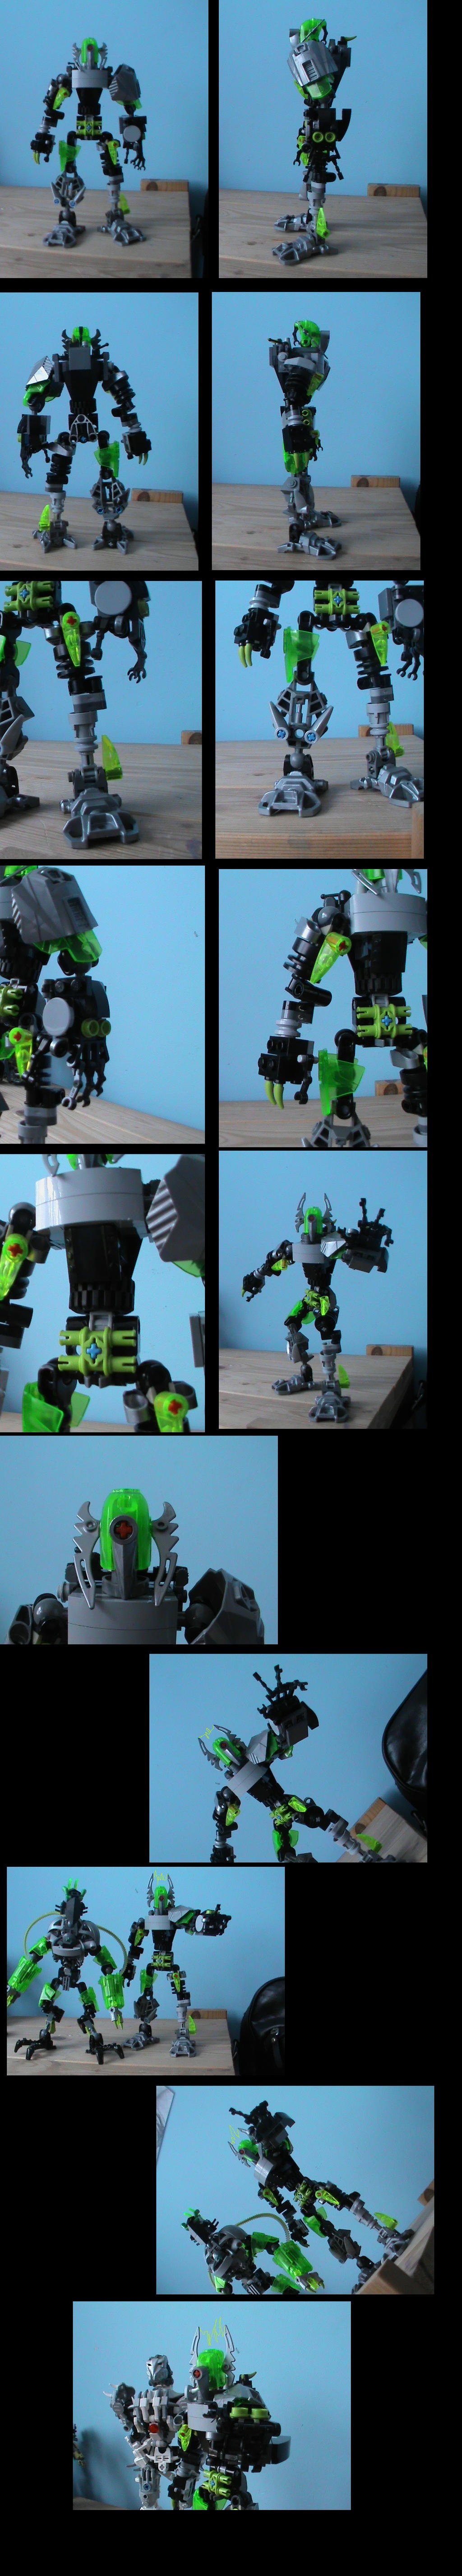 bionicle: techrus